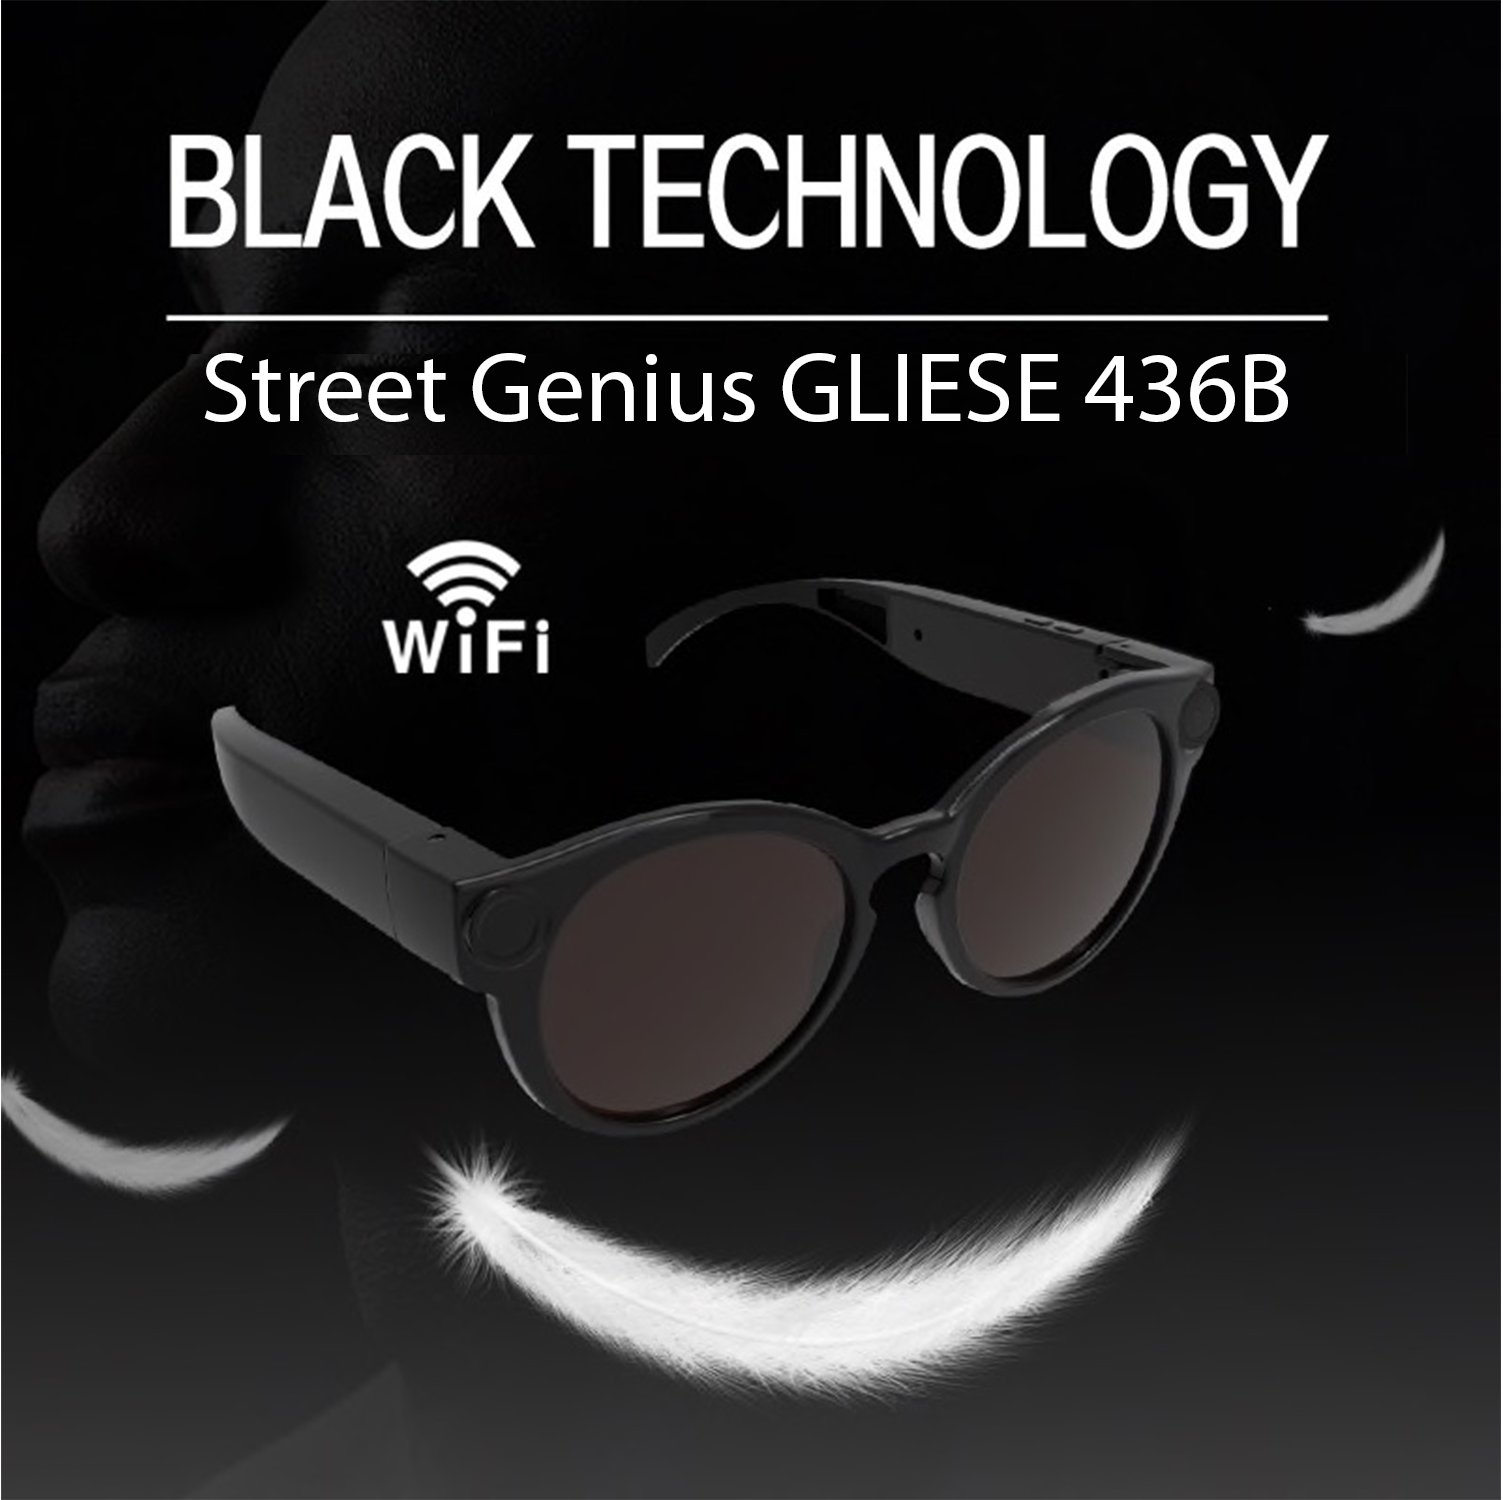 Gliese 436b (Live Streaming, 1080P HD, Smart Video, Built-in WIFI)